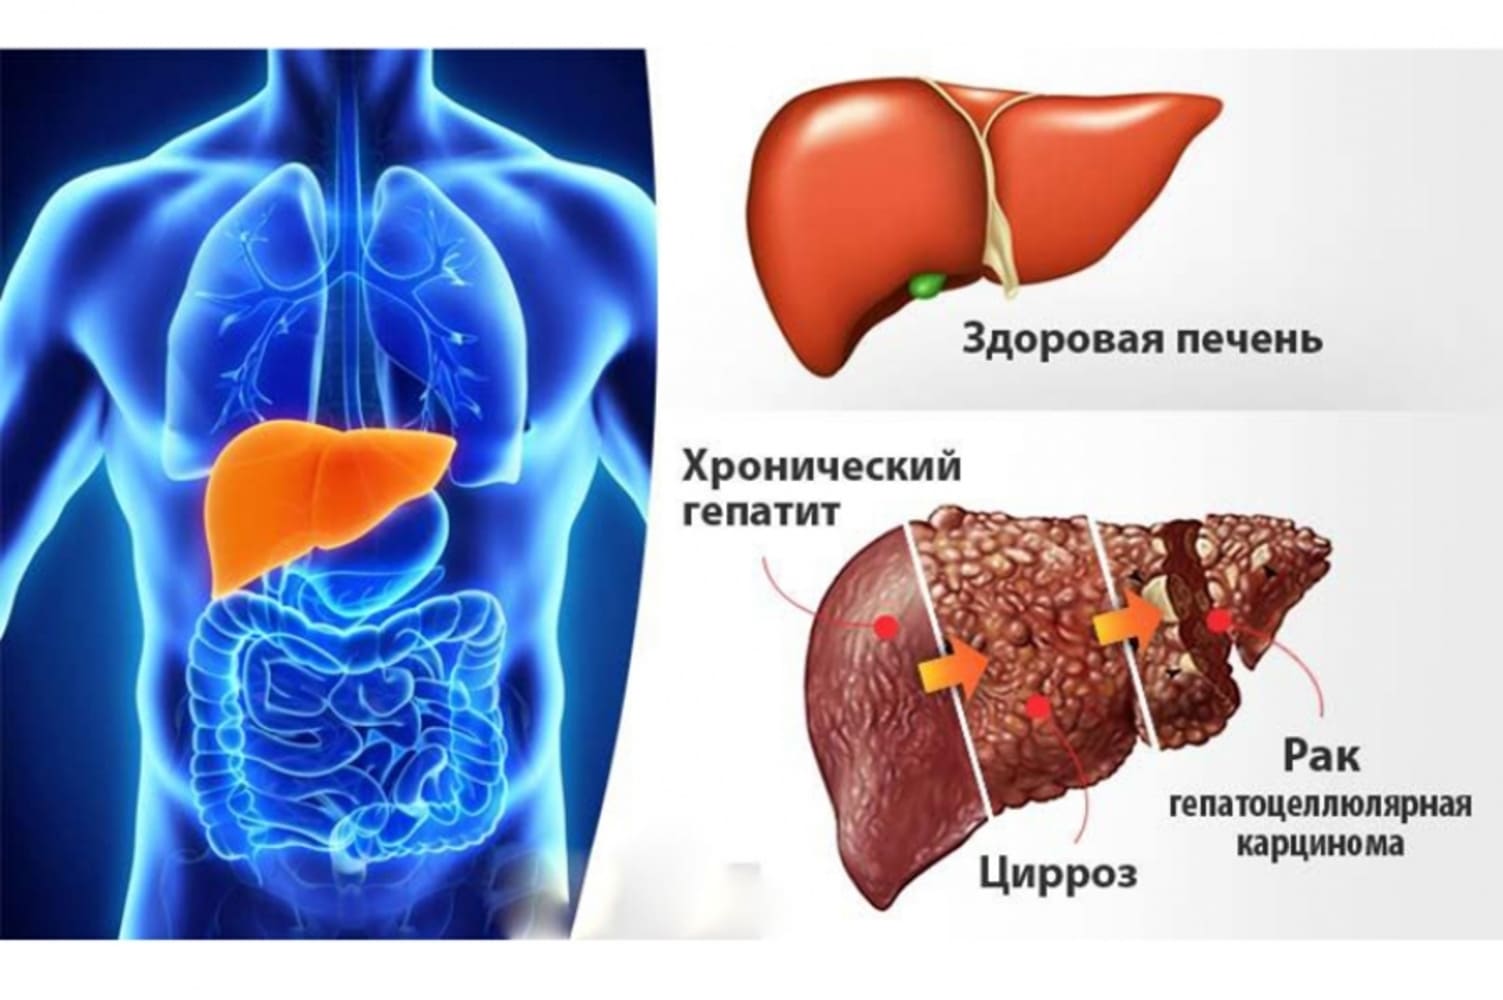 Хронический гепатит и цирроз печени